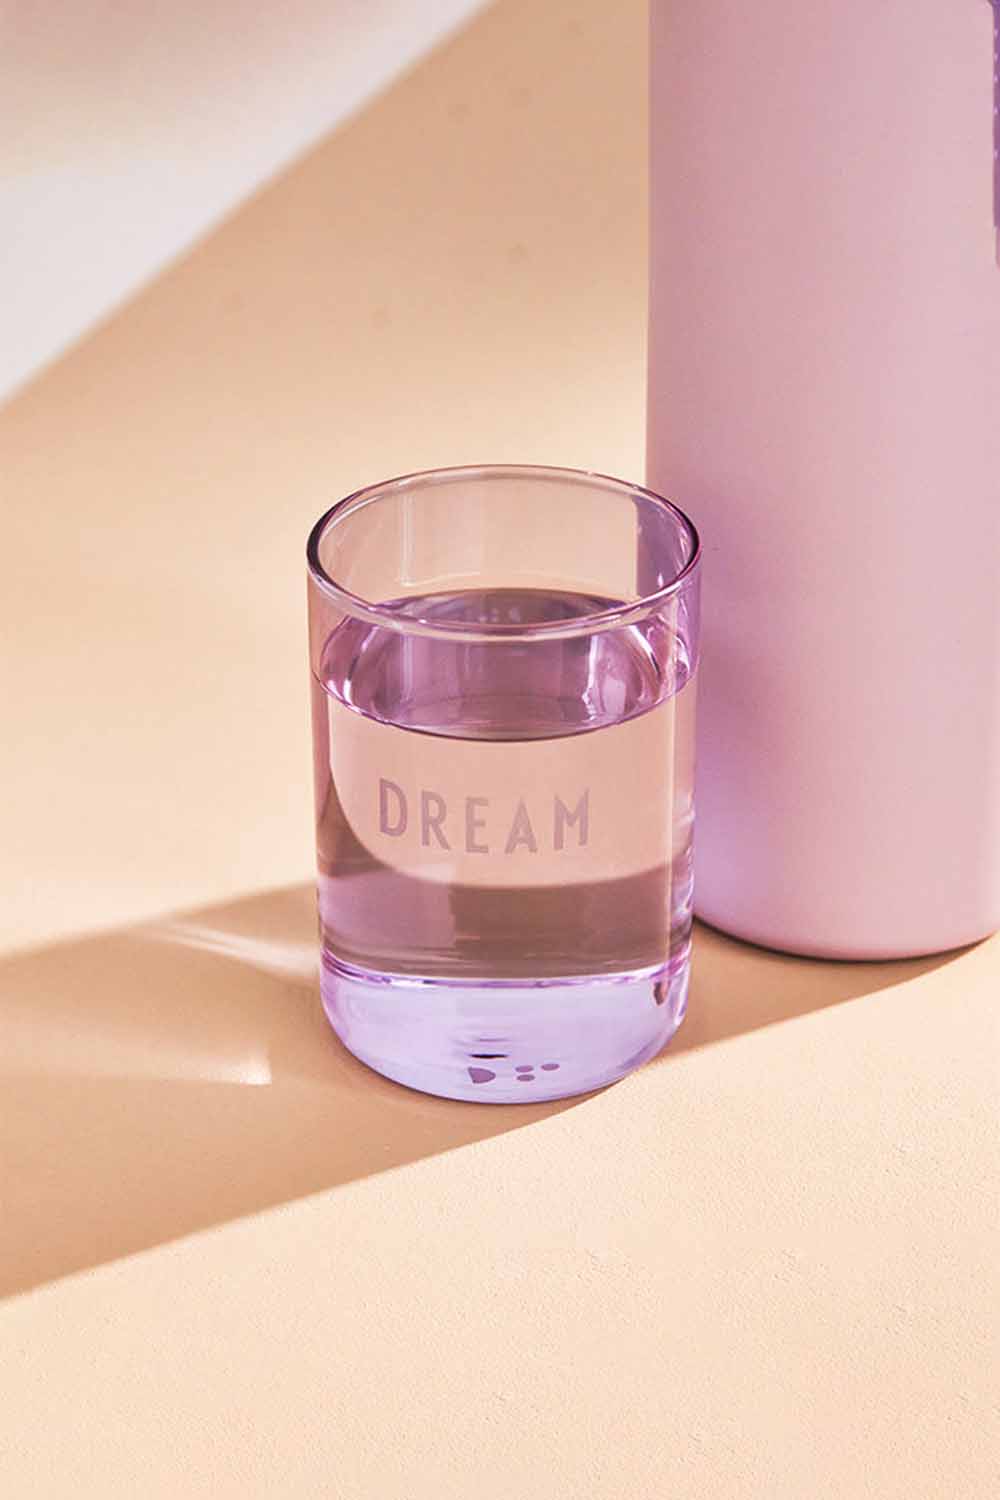 Favourite Drinking Glass - Dream